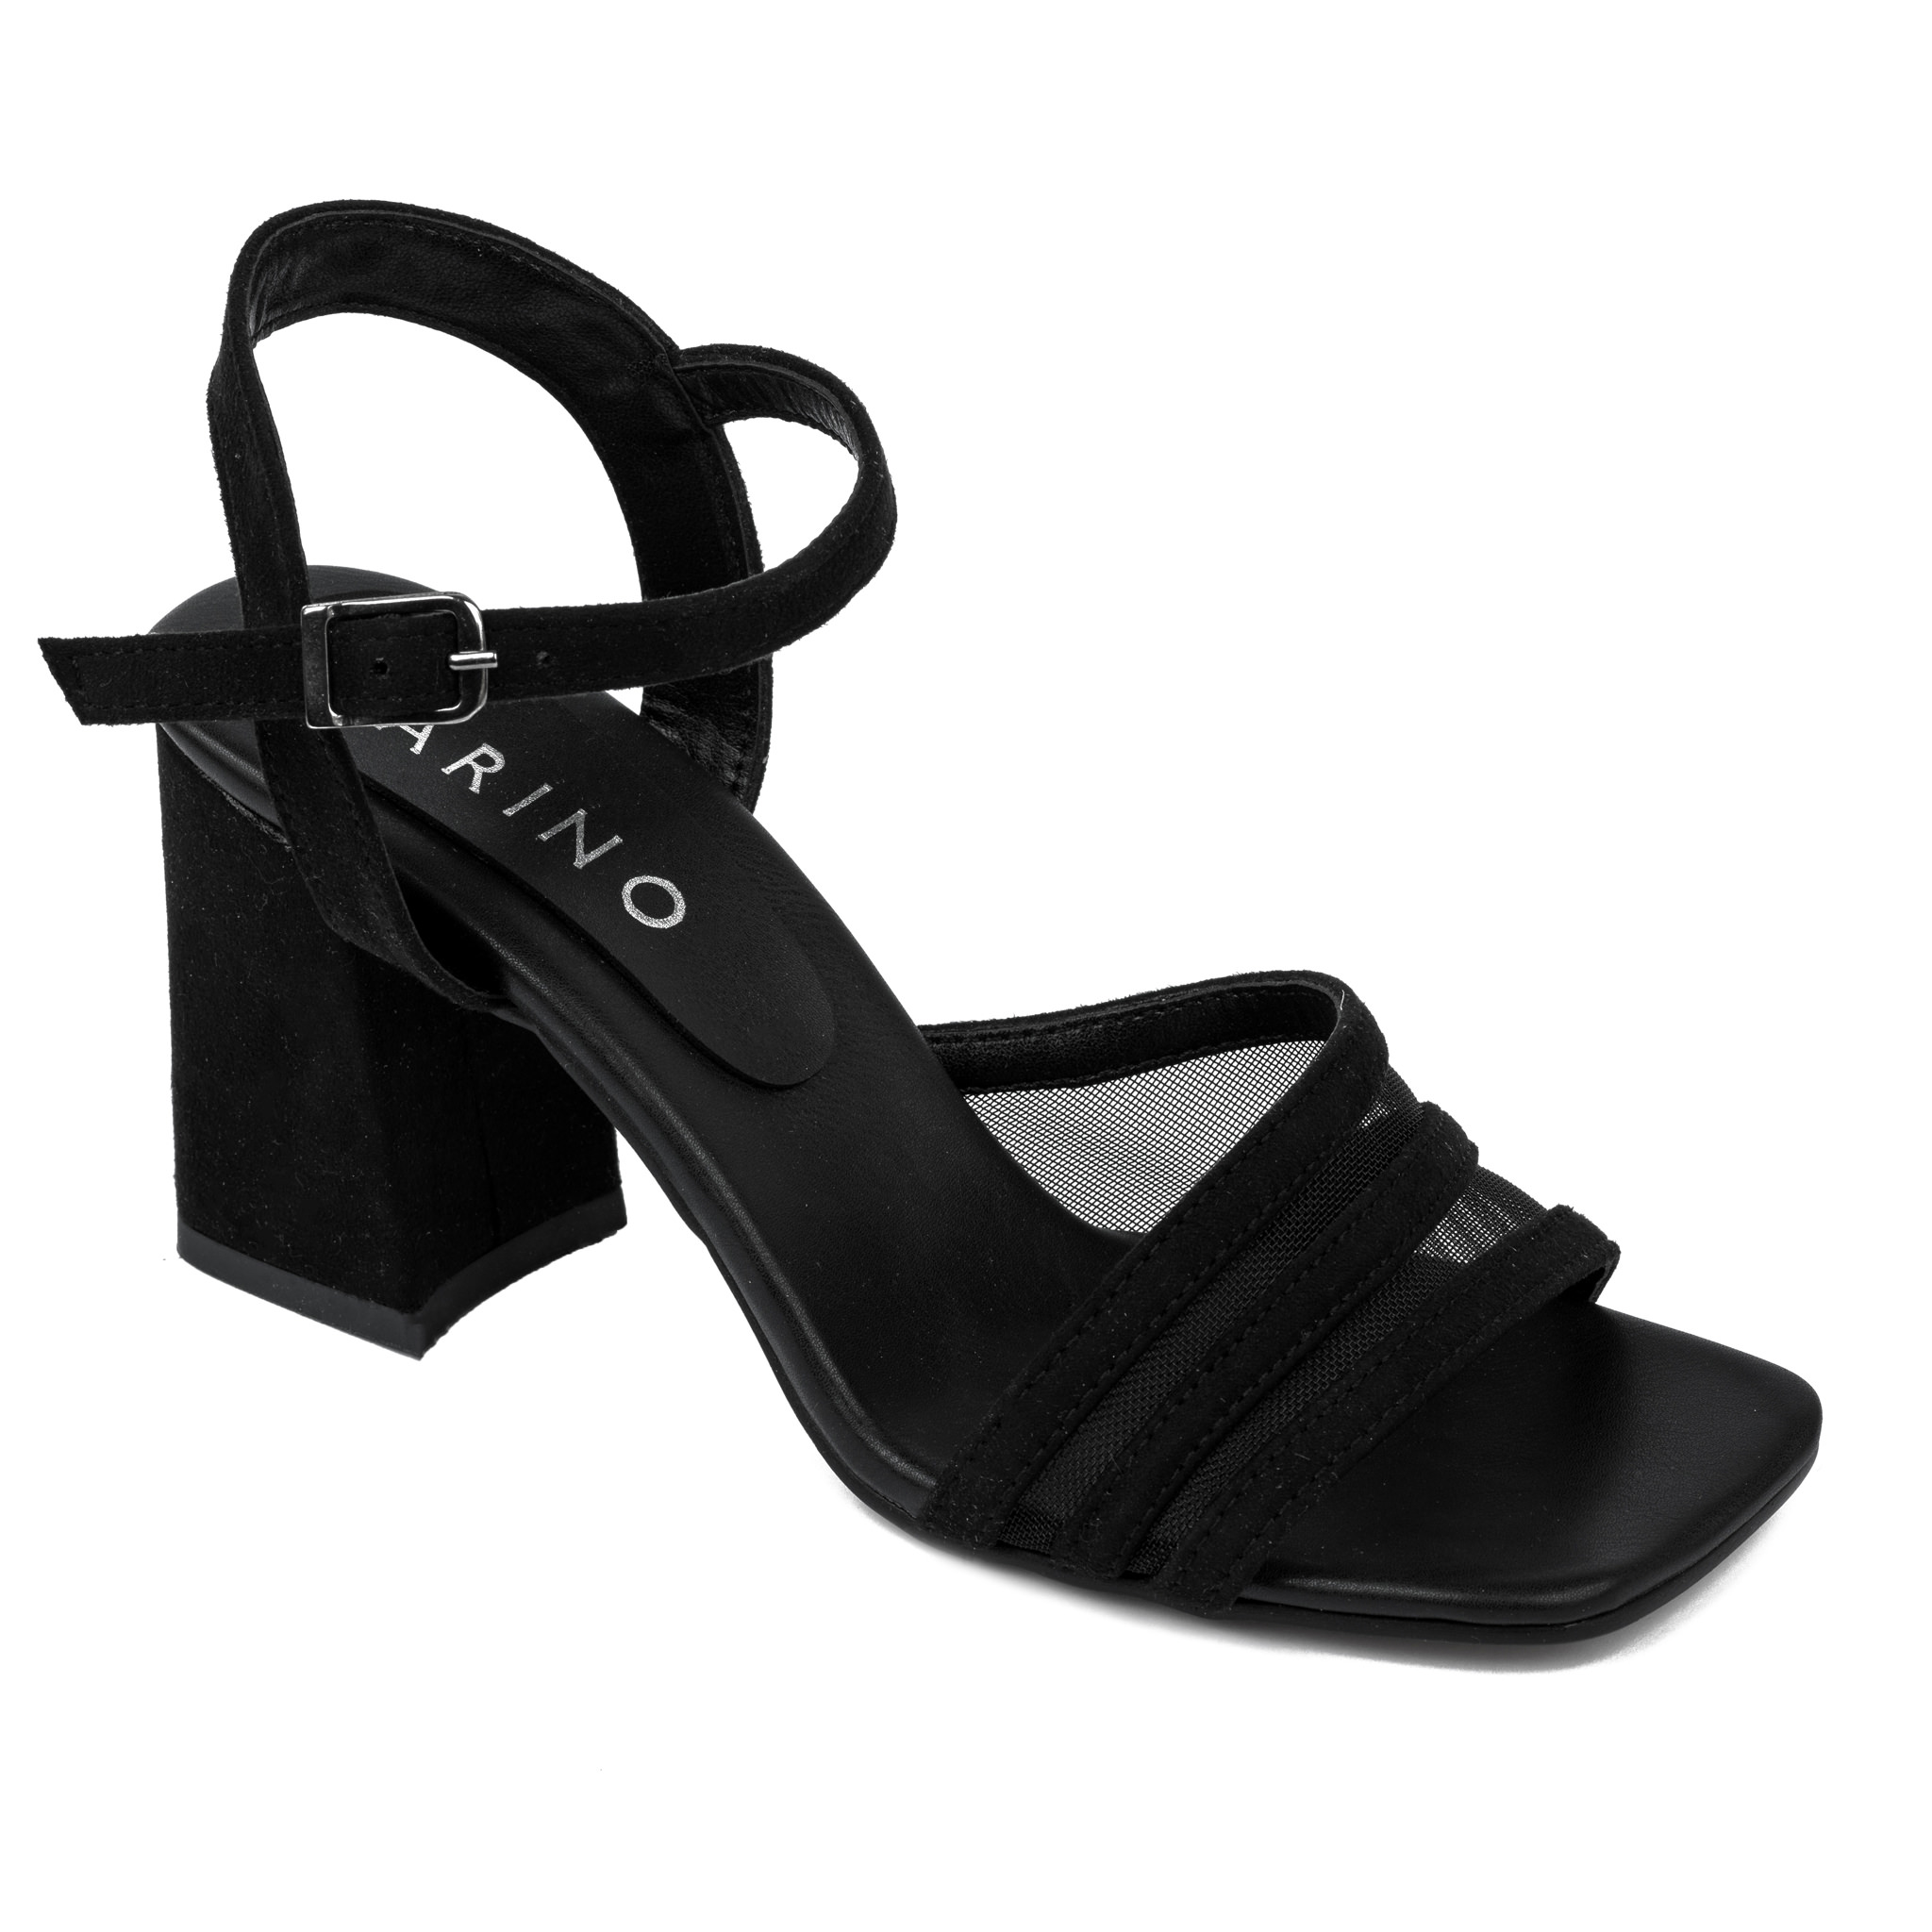 Women sandals A463 - BLACK